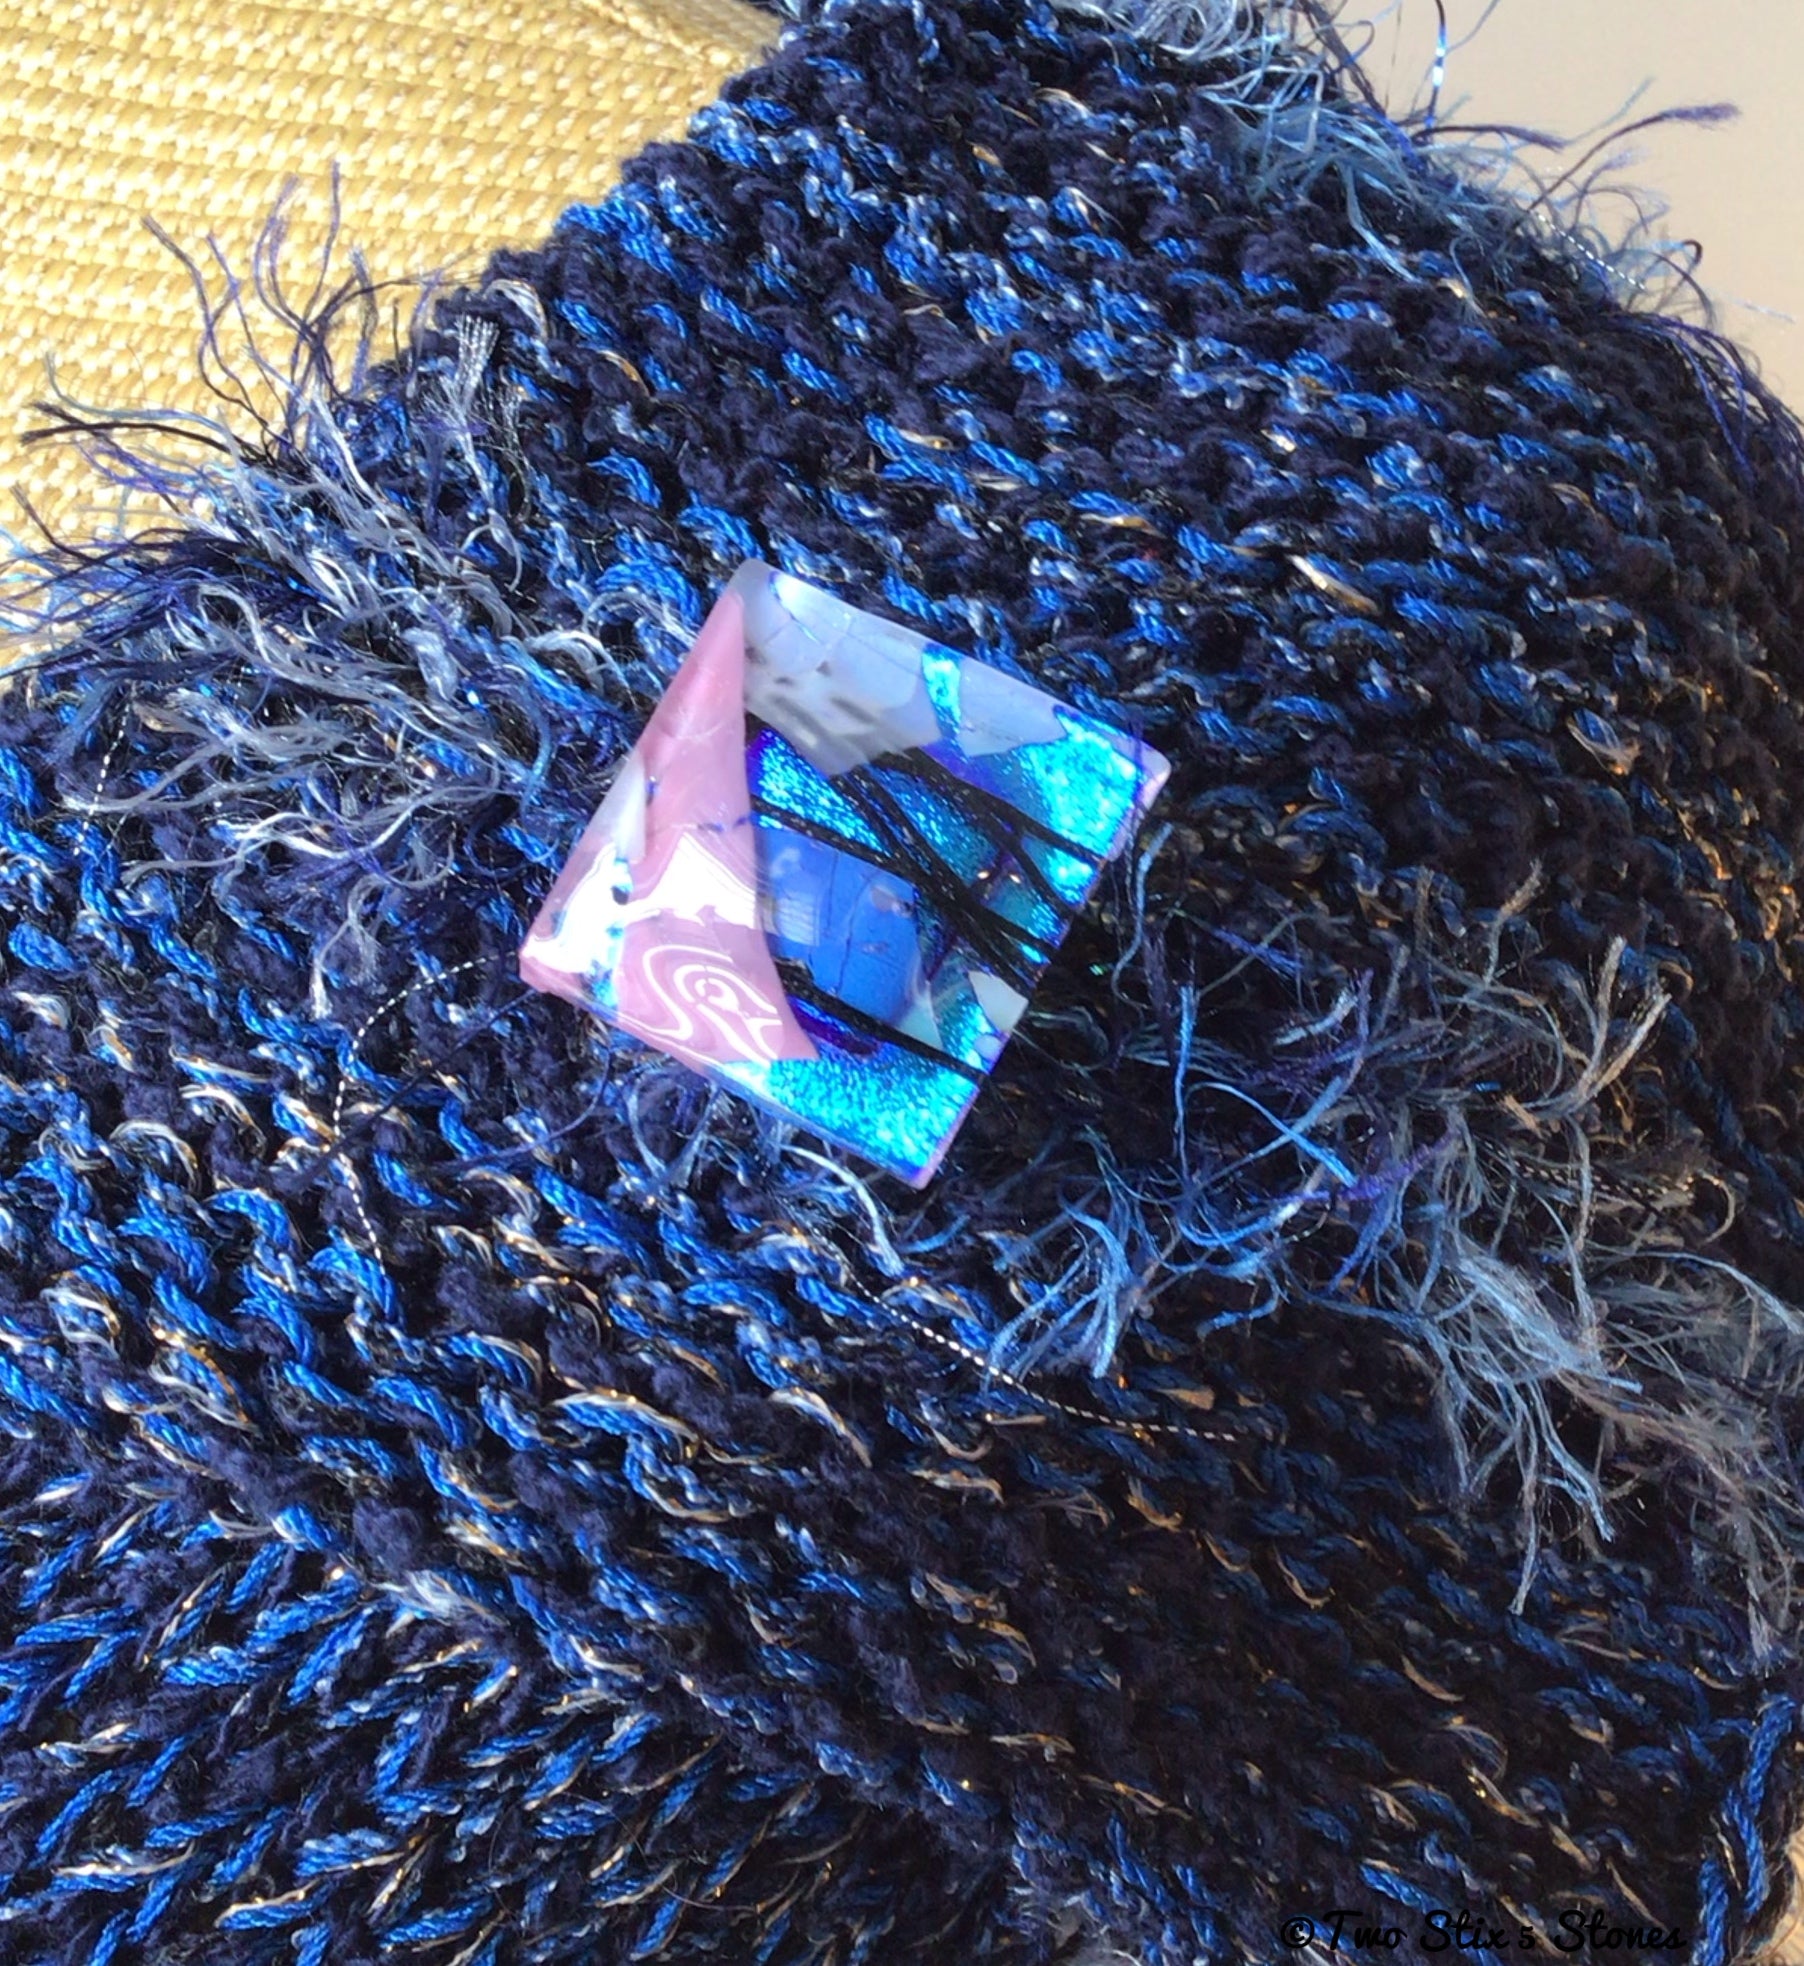 Luxe Denim Tweed Knit Shawl